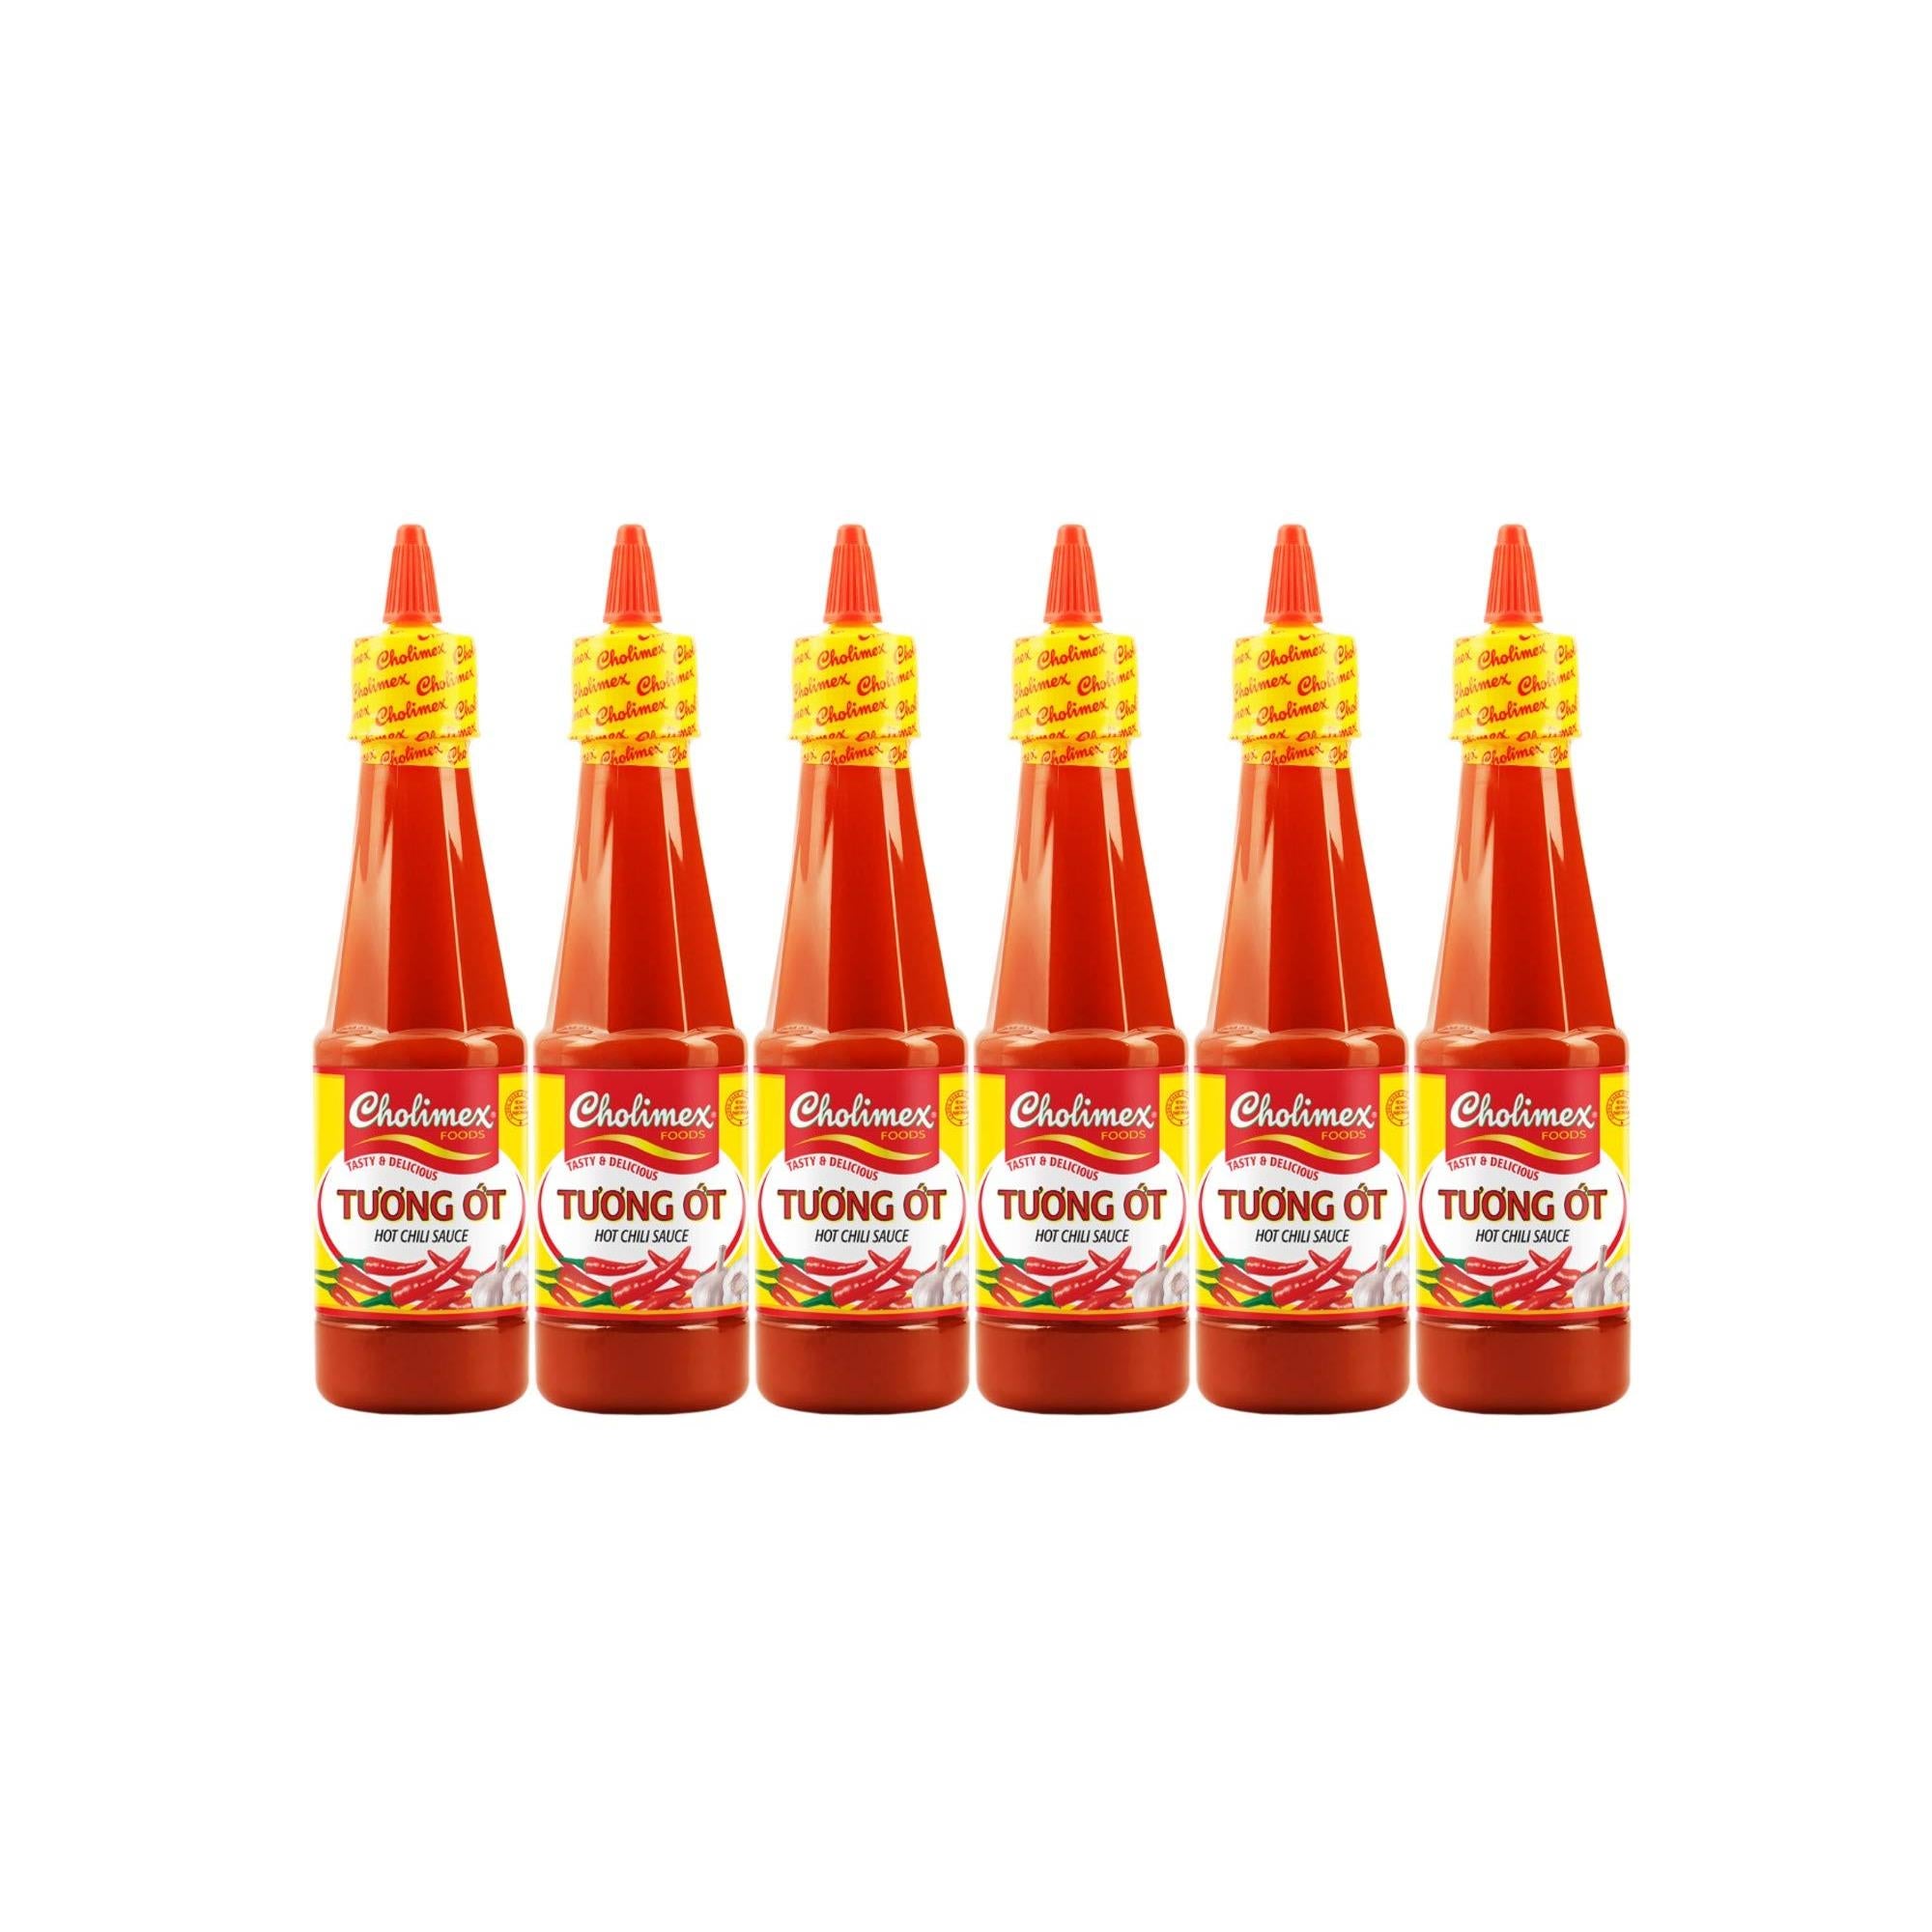 CHOLIMEX Hot Chili Sauce - 8.45 Fl Oz (250ml) - Pack of 6